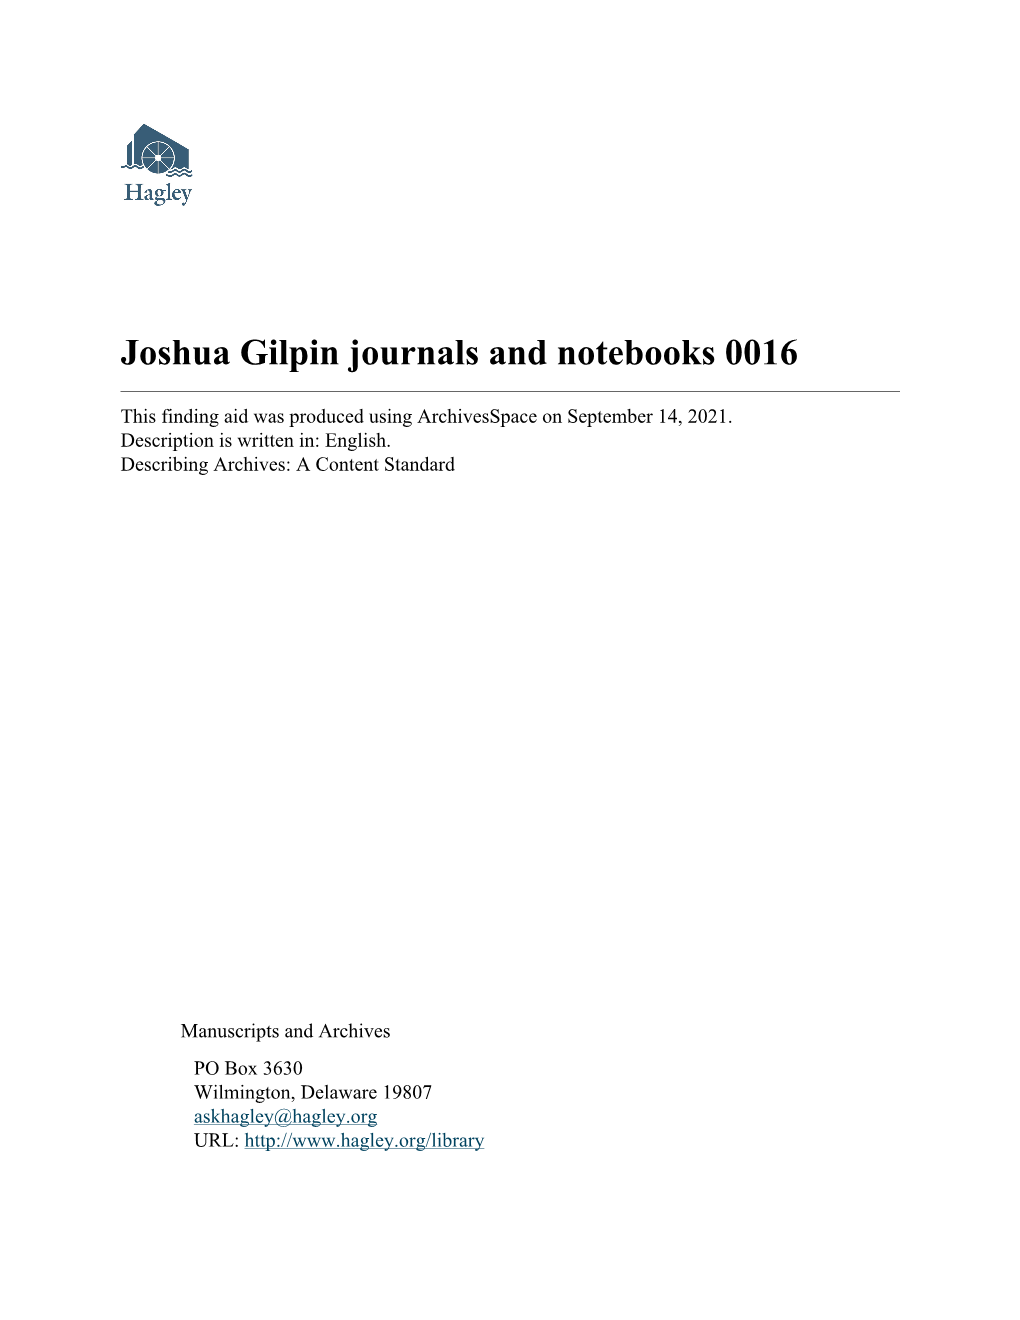 Joshua Gilpin Journals and Notebooks 0016